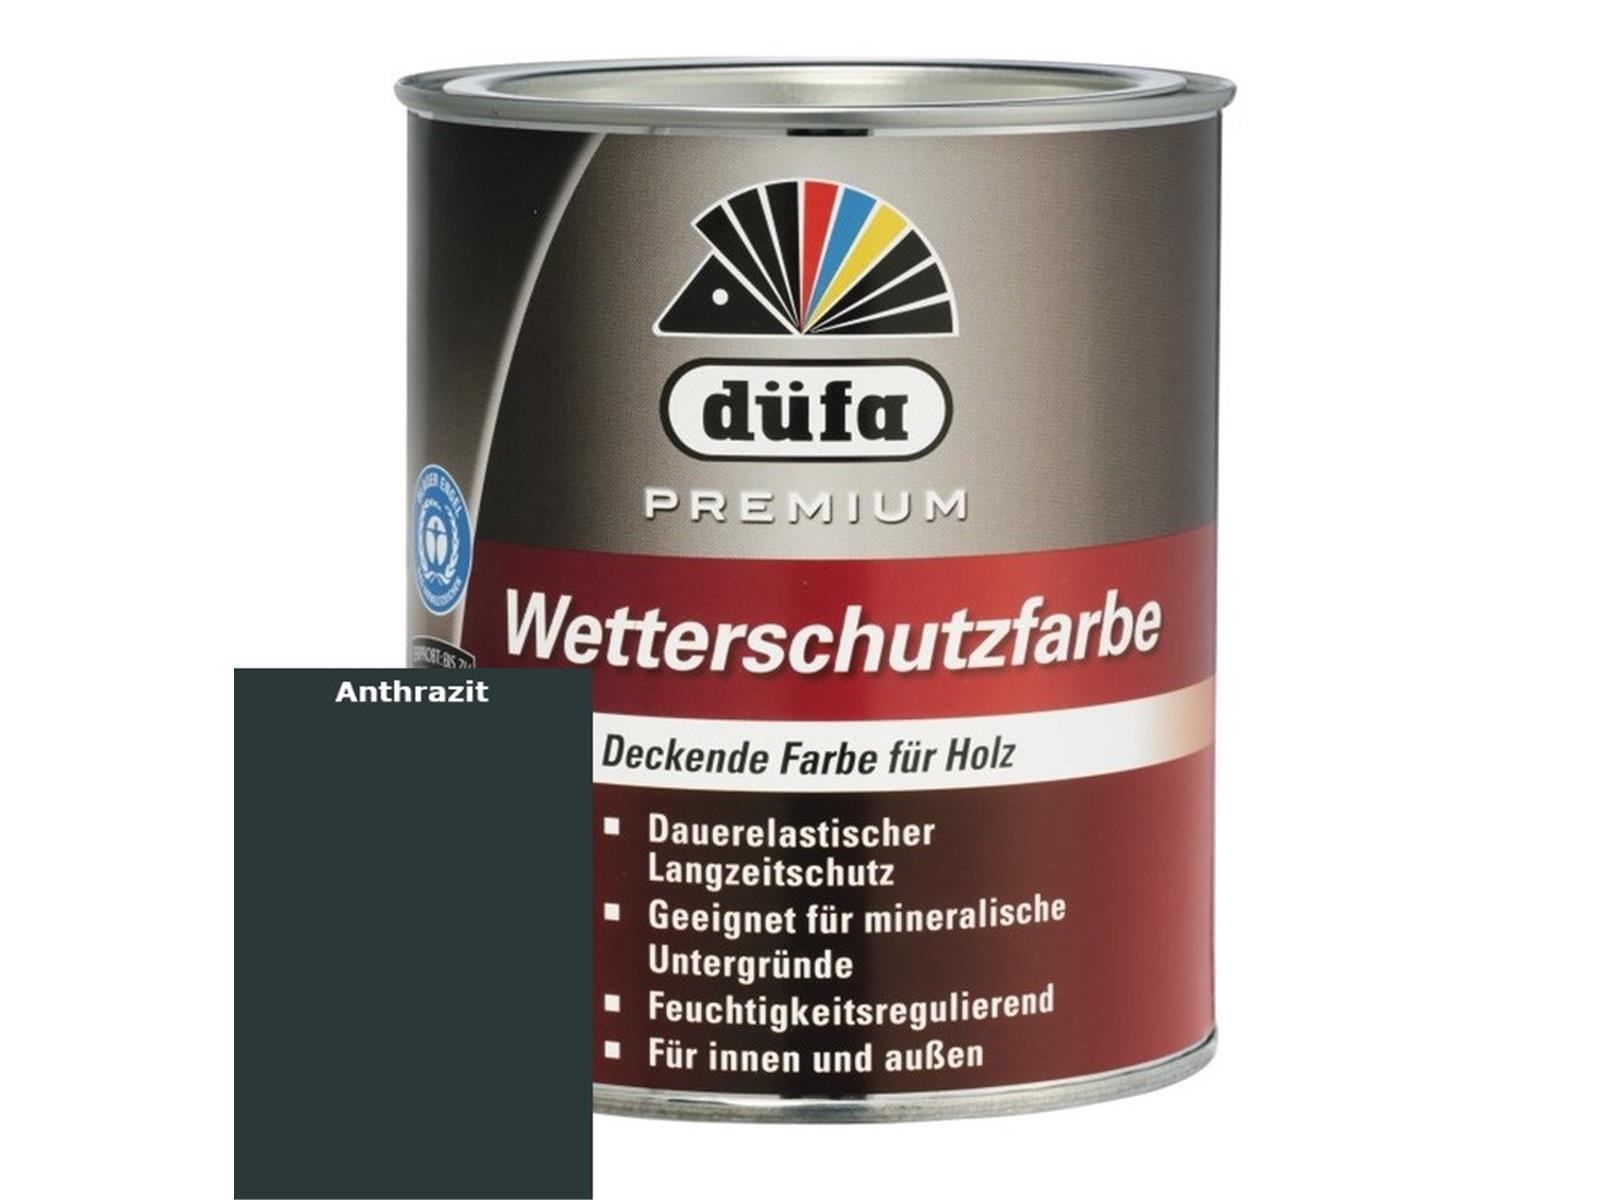 düfa Premium Wetterschutzfarbe & Holzfarbe Anthrazit 2,5 L